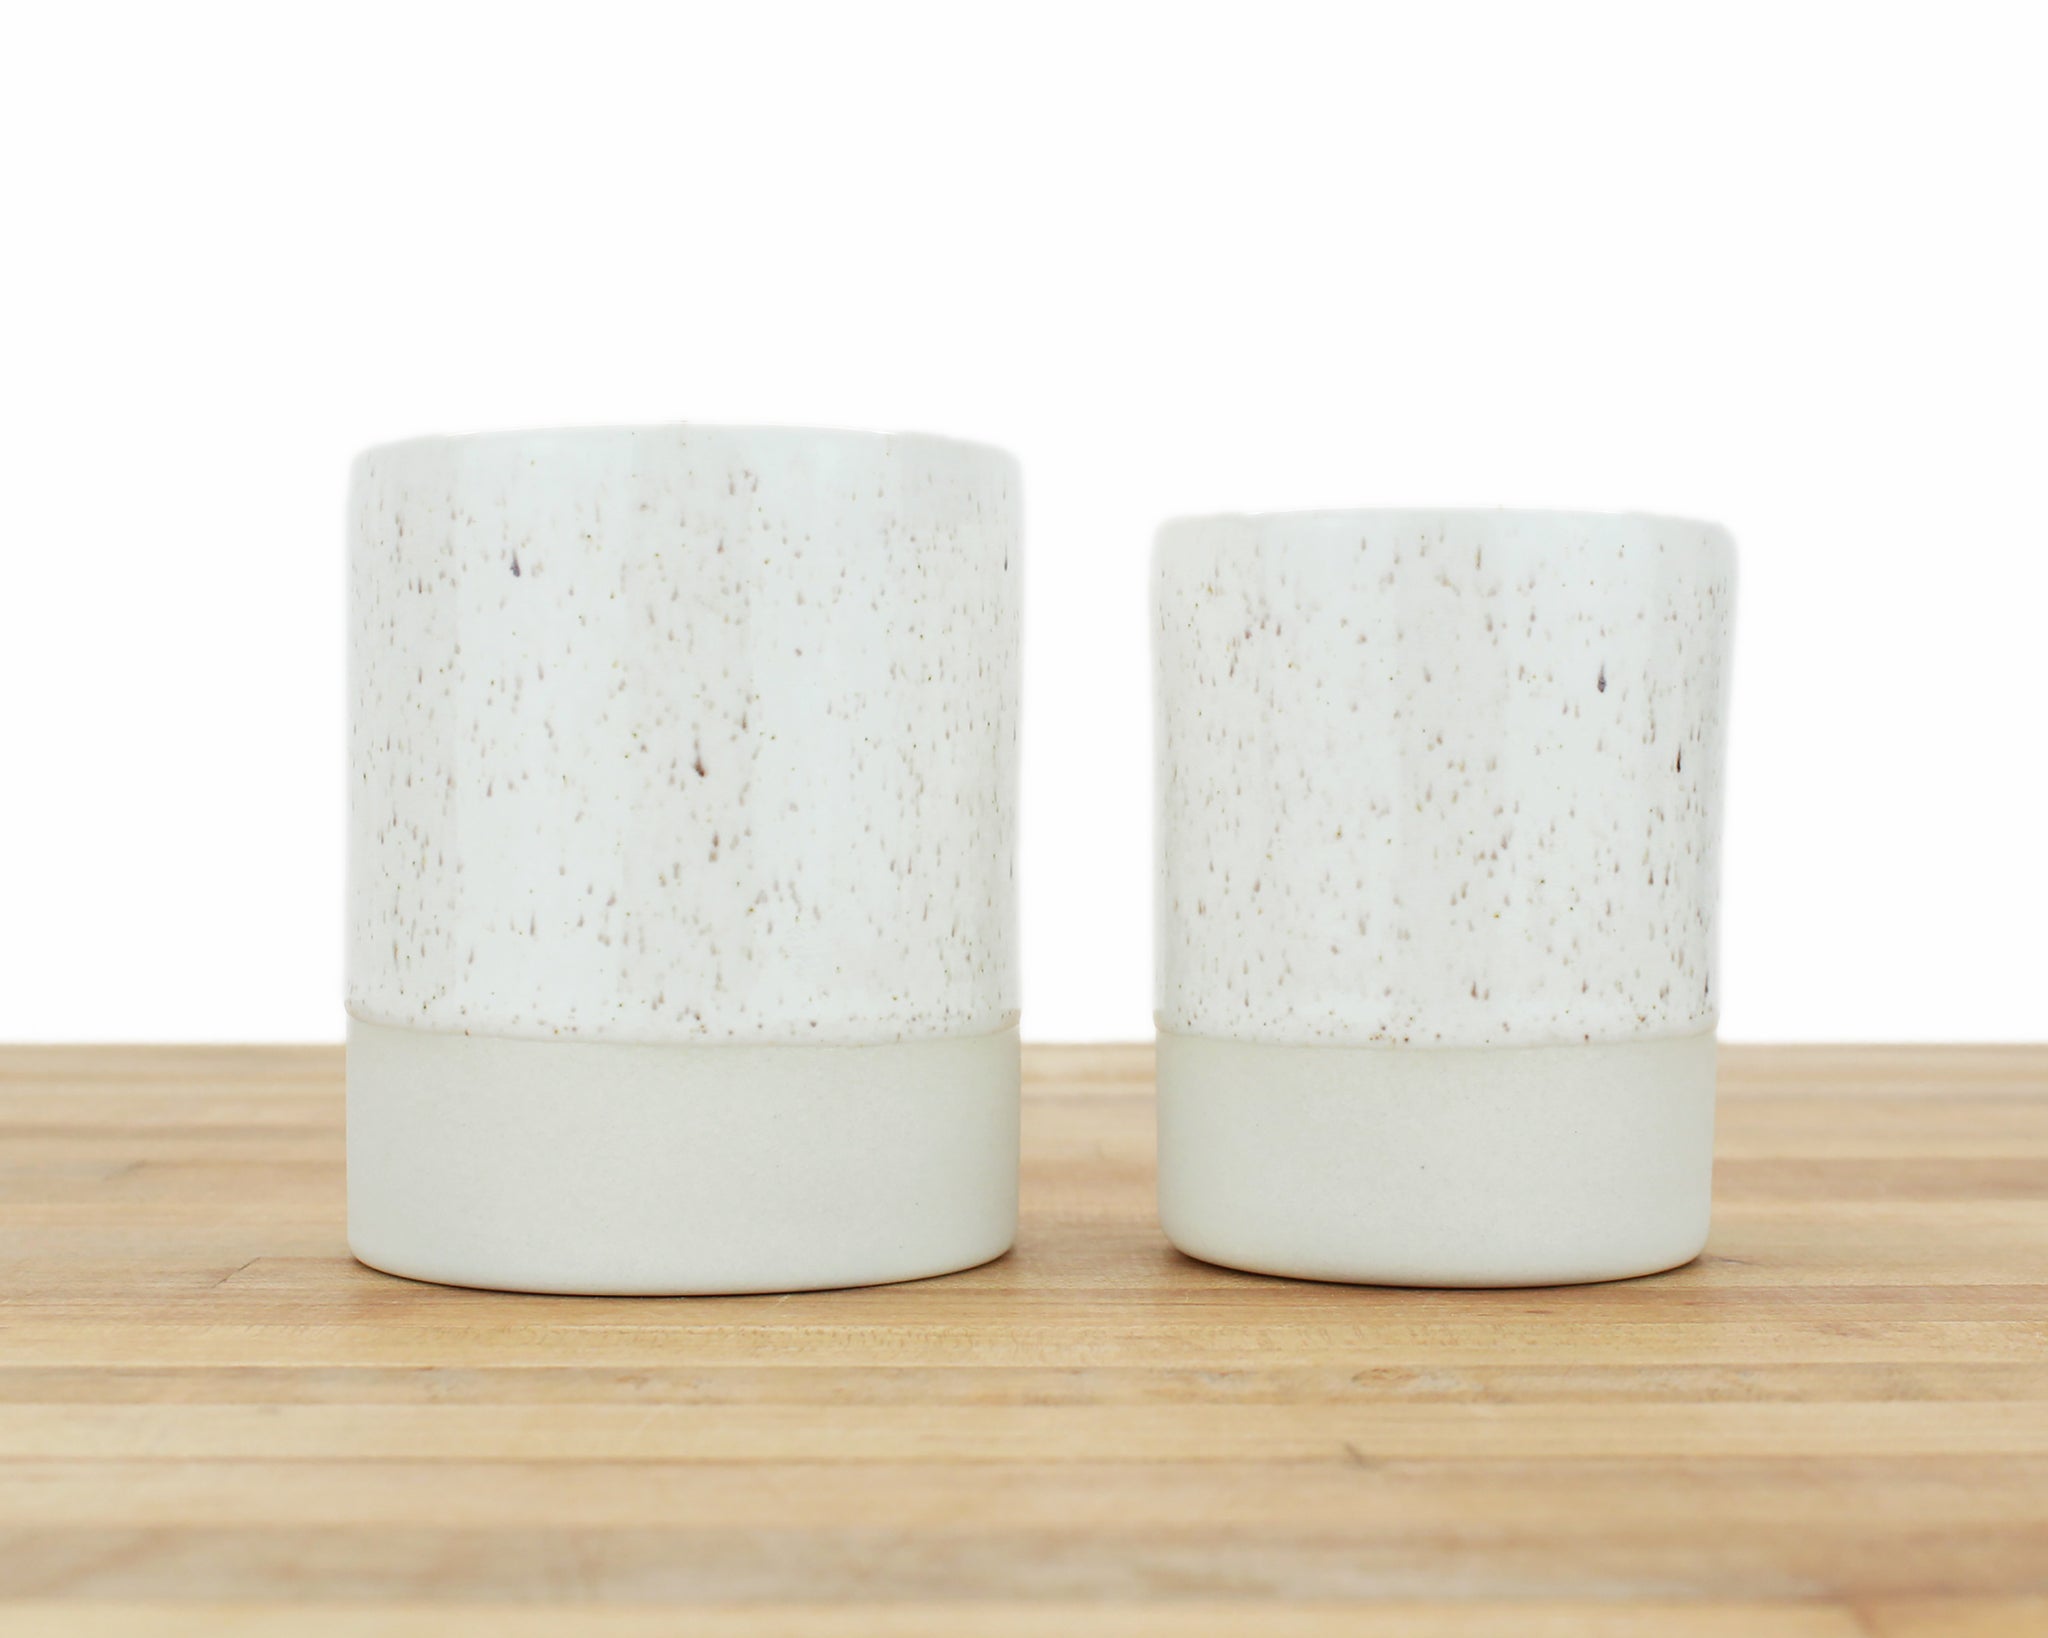 Speckled Glaze Cups - Three Sizes!